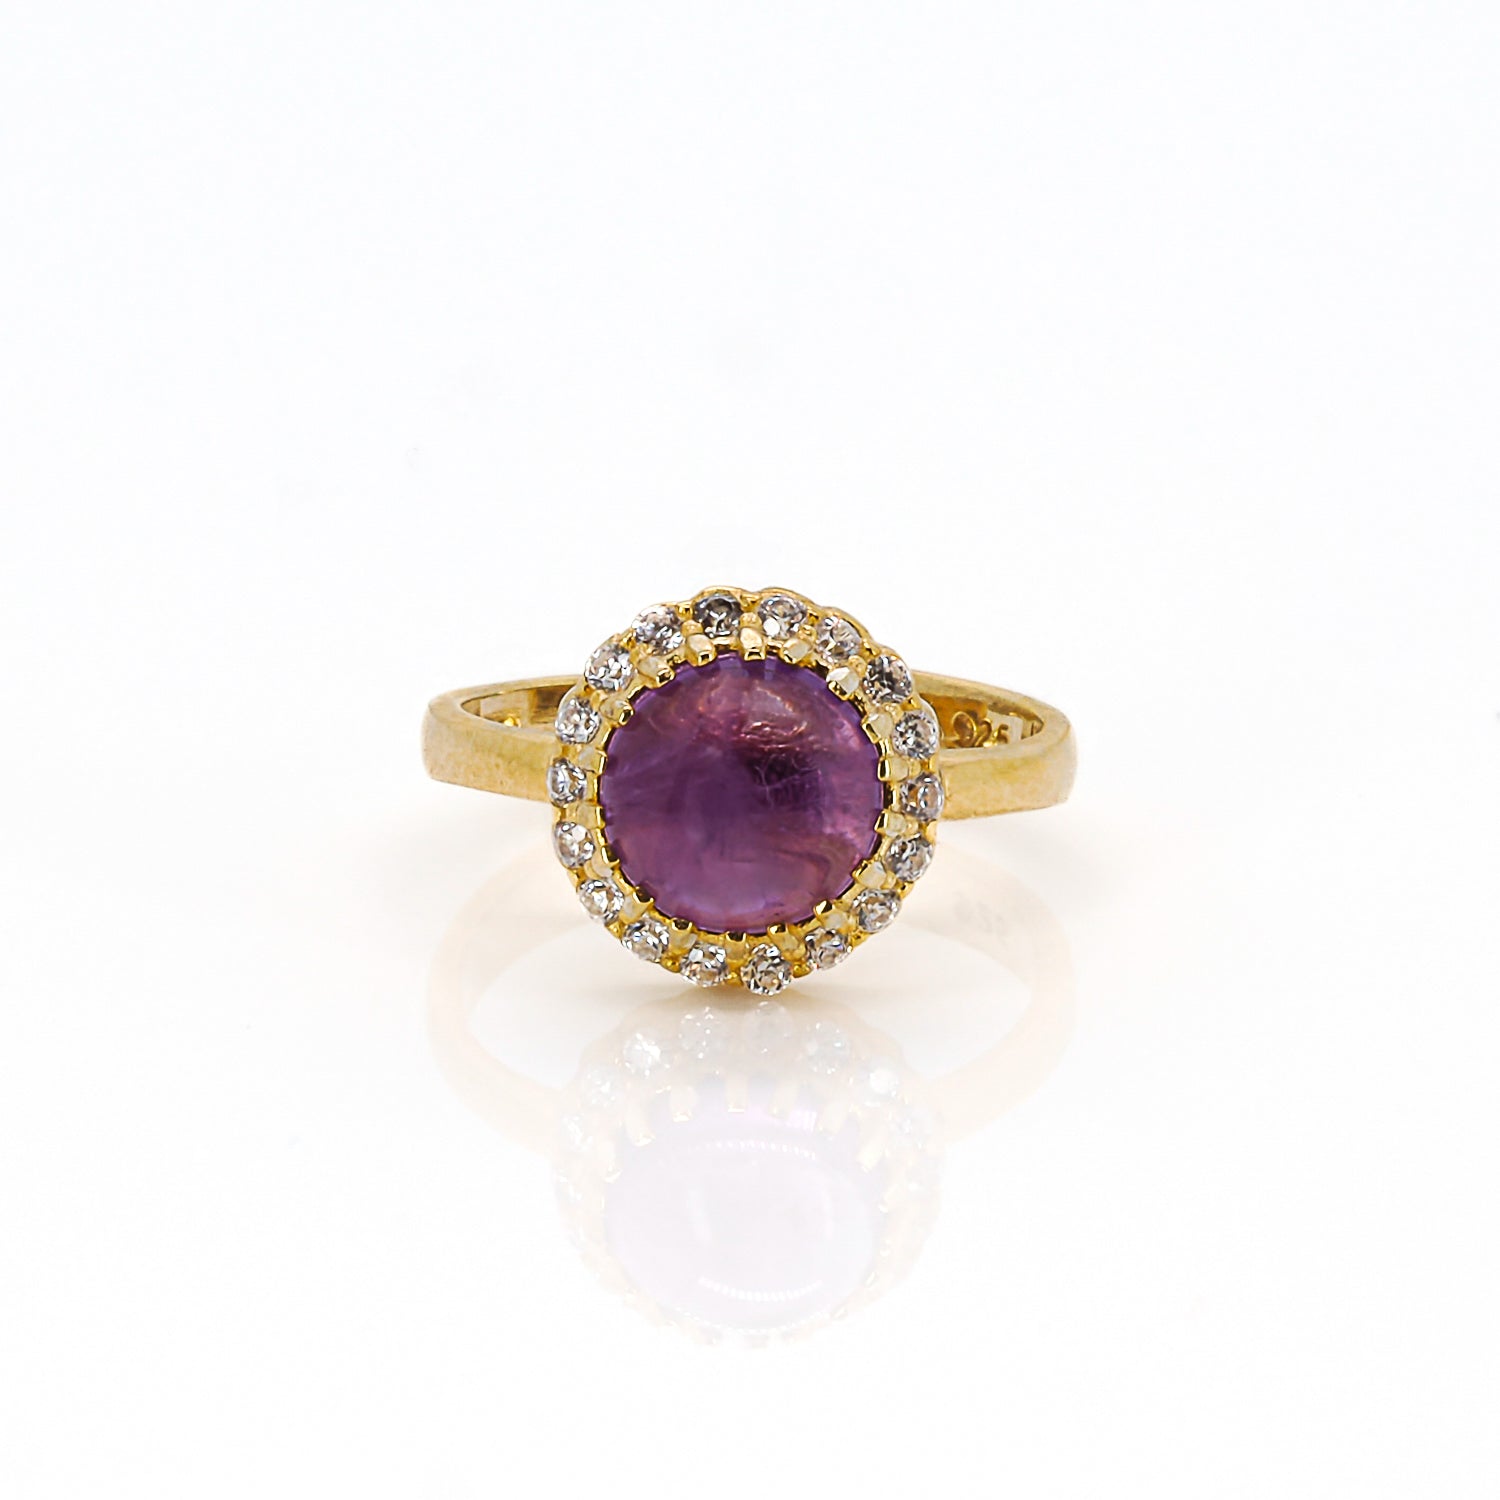 Elegant Gold & Diamond Amethyst Gemstone Ring - Handmade in the USA.